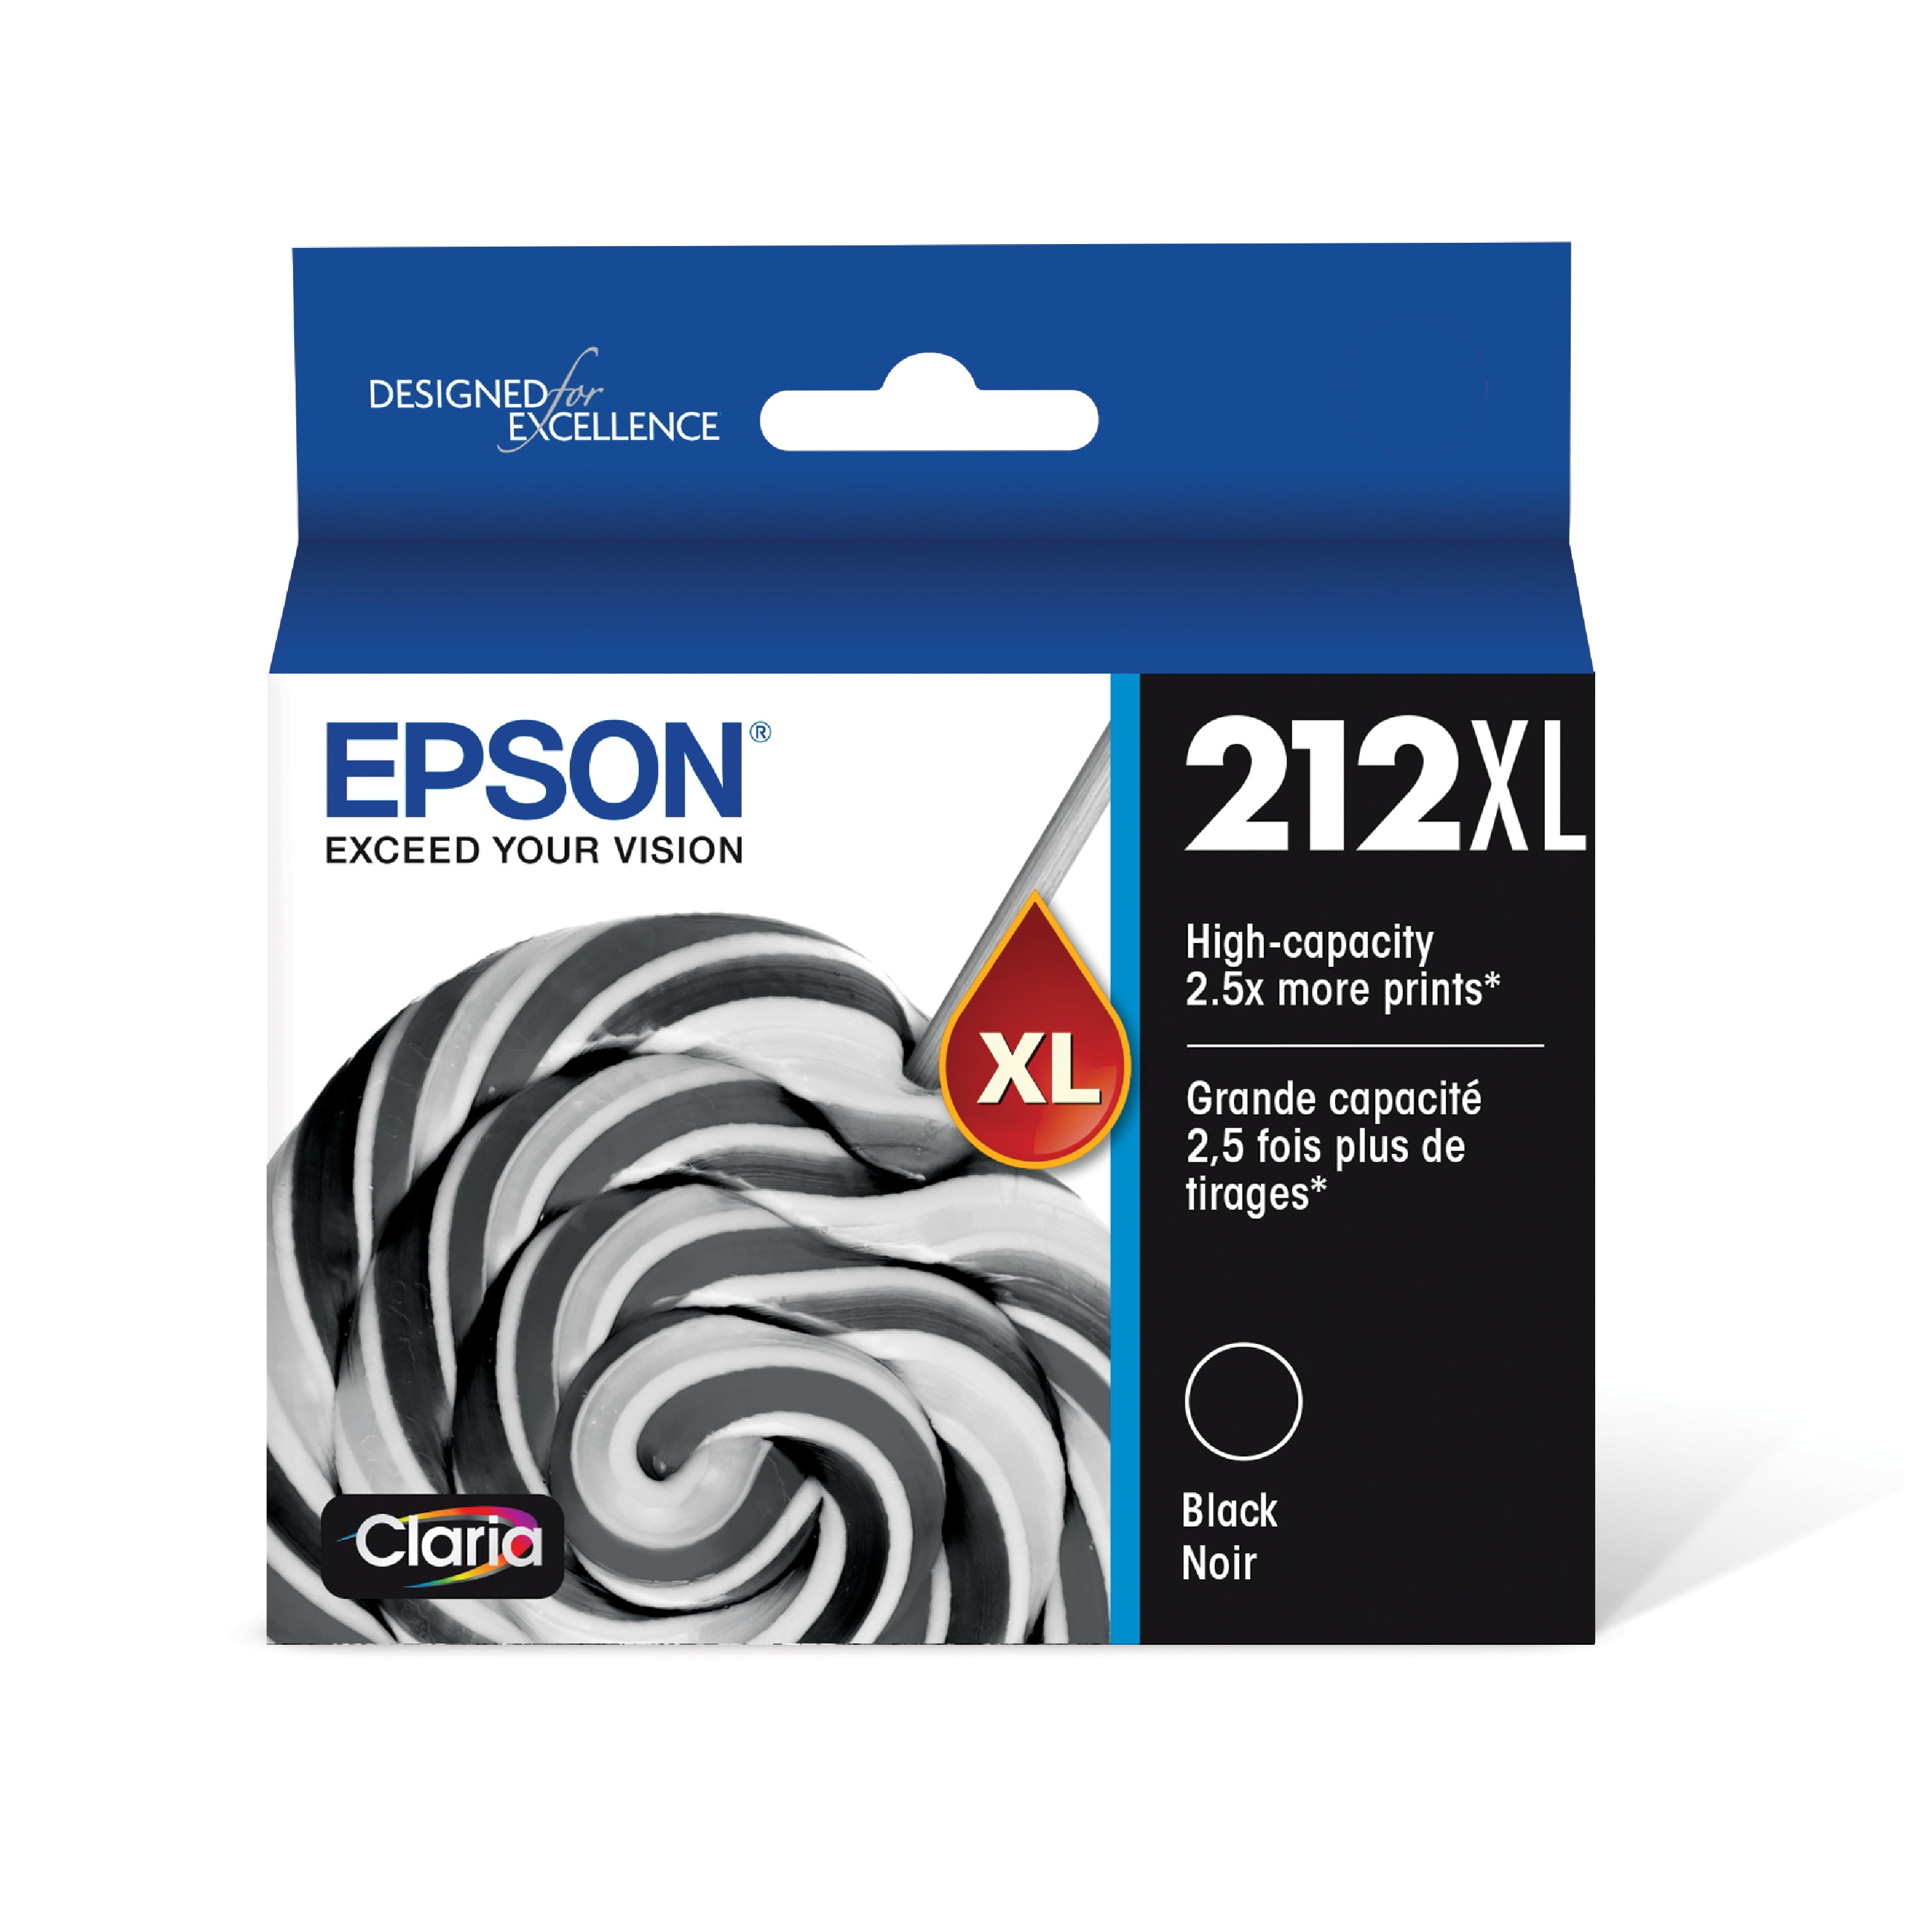 EPSON T212 Claria Genuine Ink High Capacity Black Cartridge